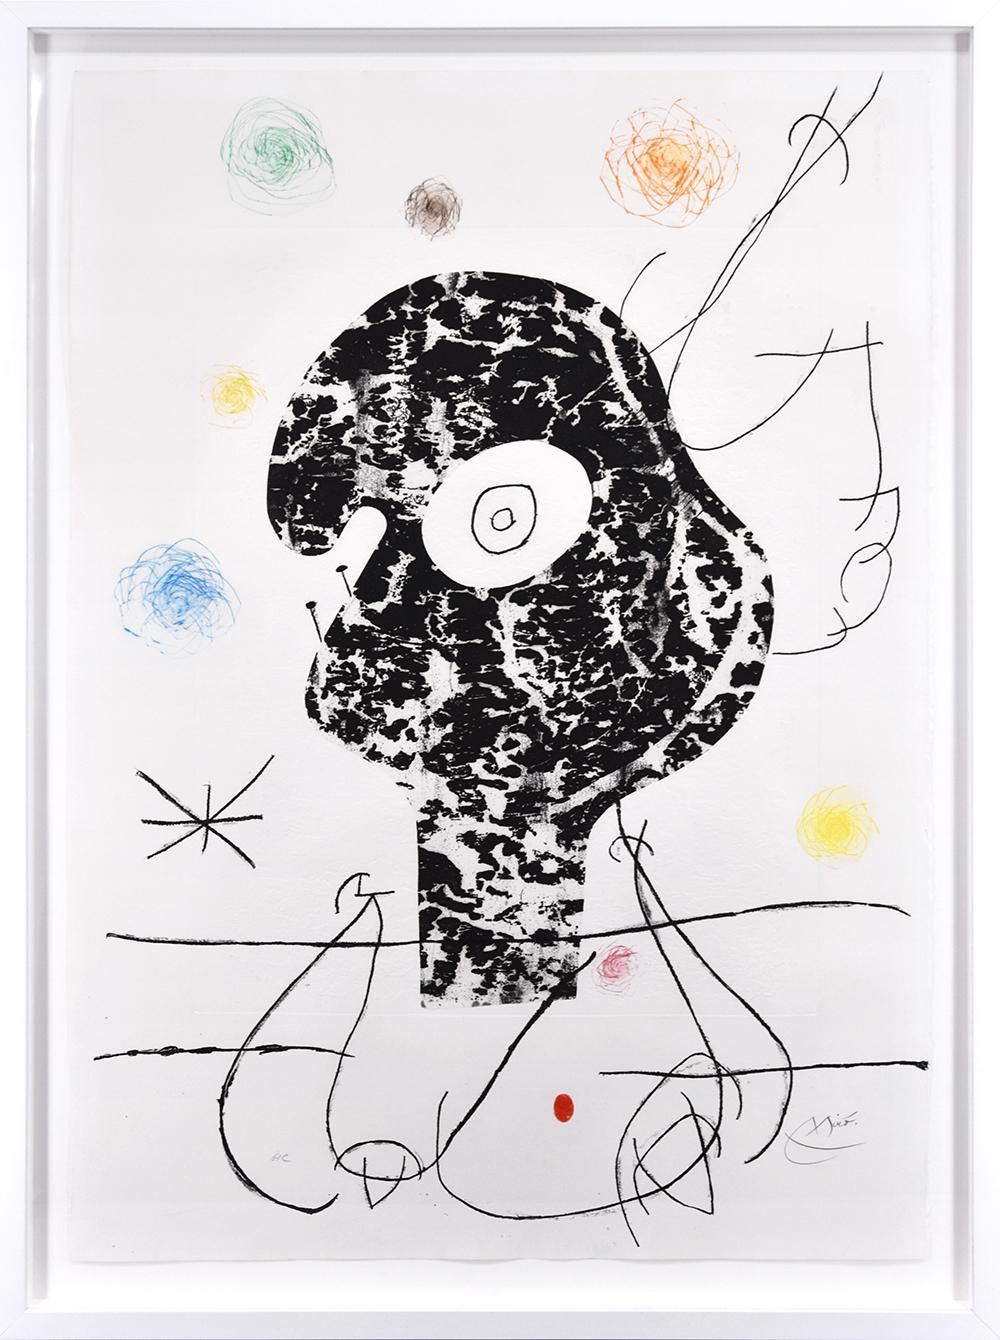 Emehpylop (Cyclops), 1968 - Print by Joan Miró